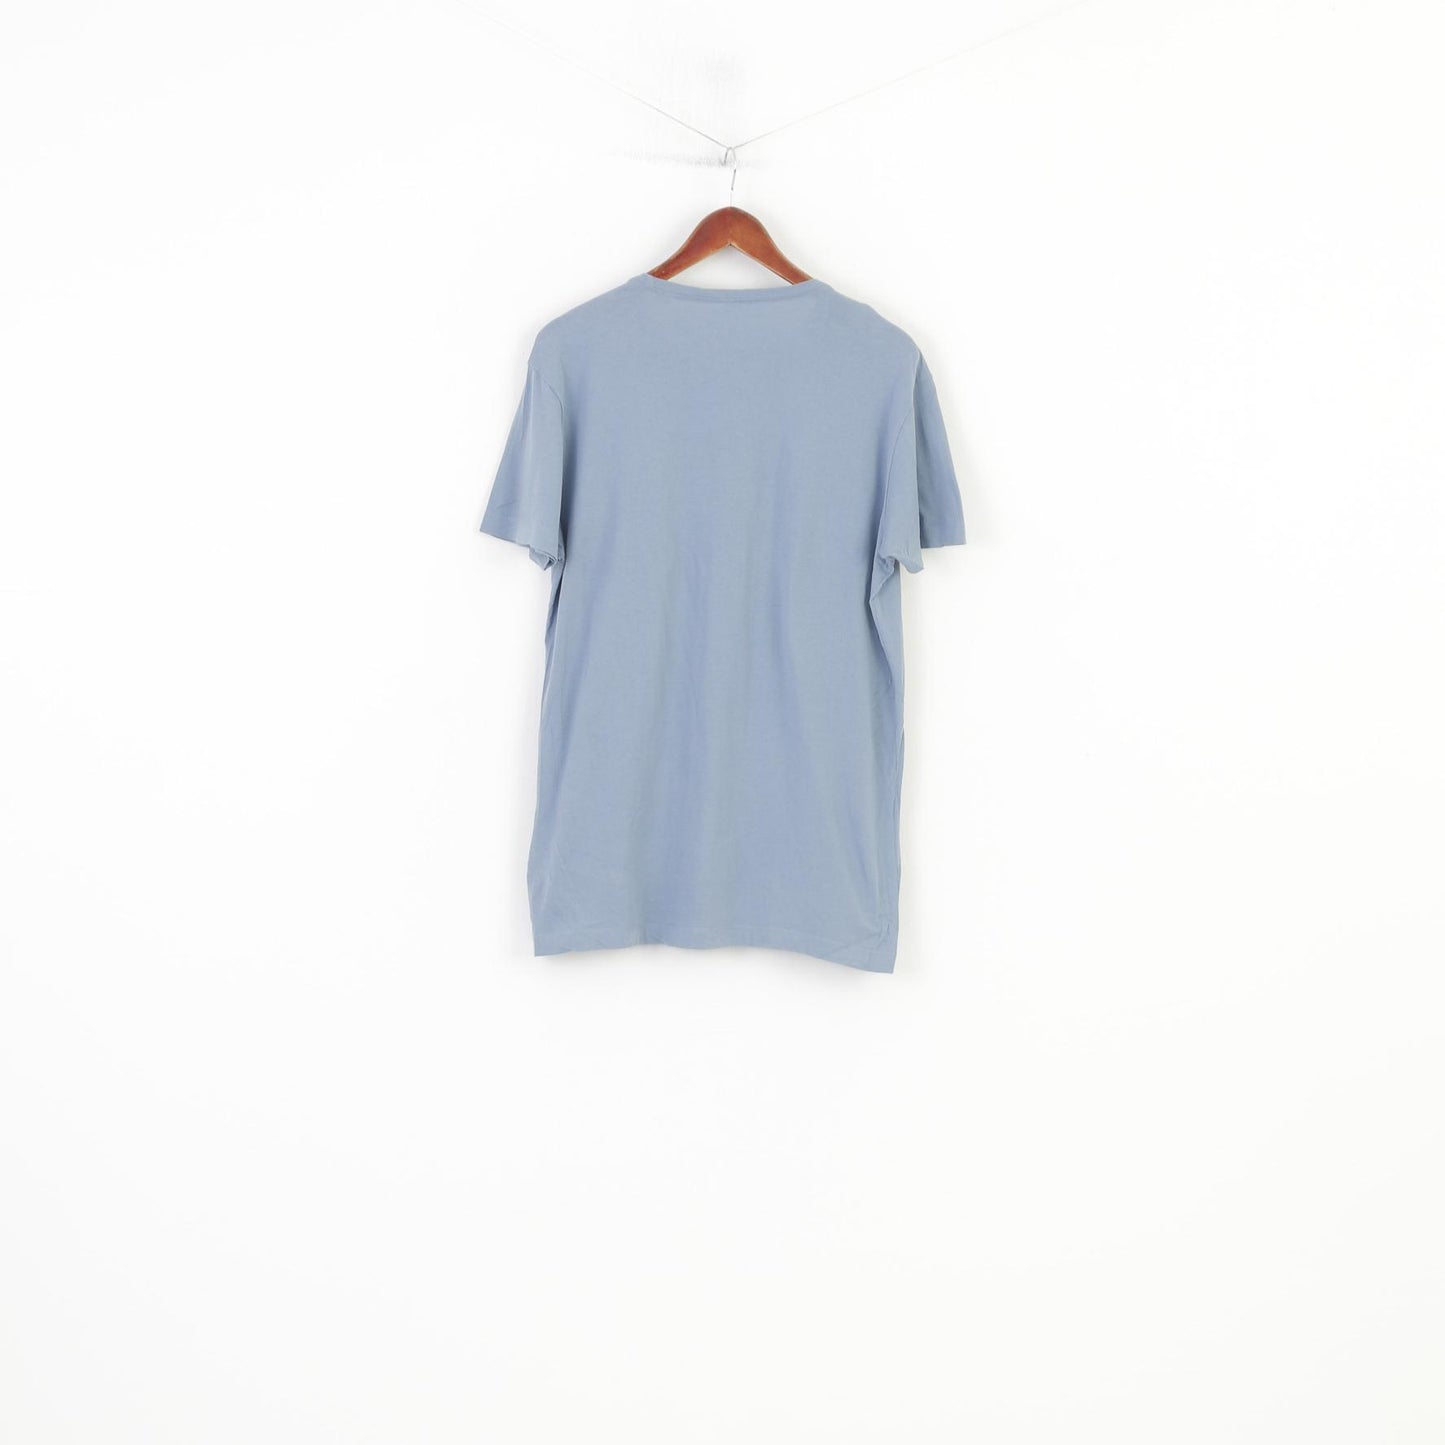 Diesel Men XL T- Shirt Blue Cotton Emroidered Graphic Classic Tee  Crew Neck Top